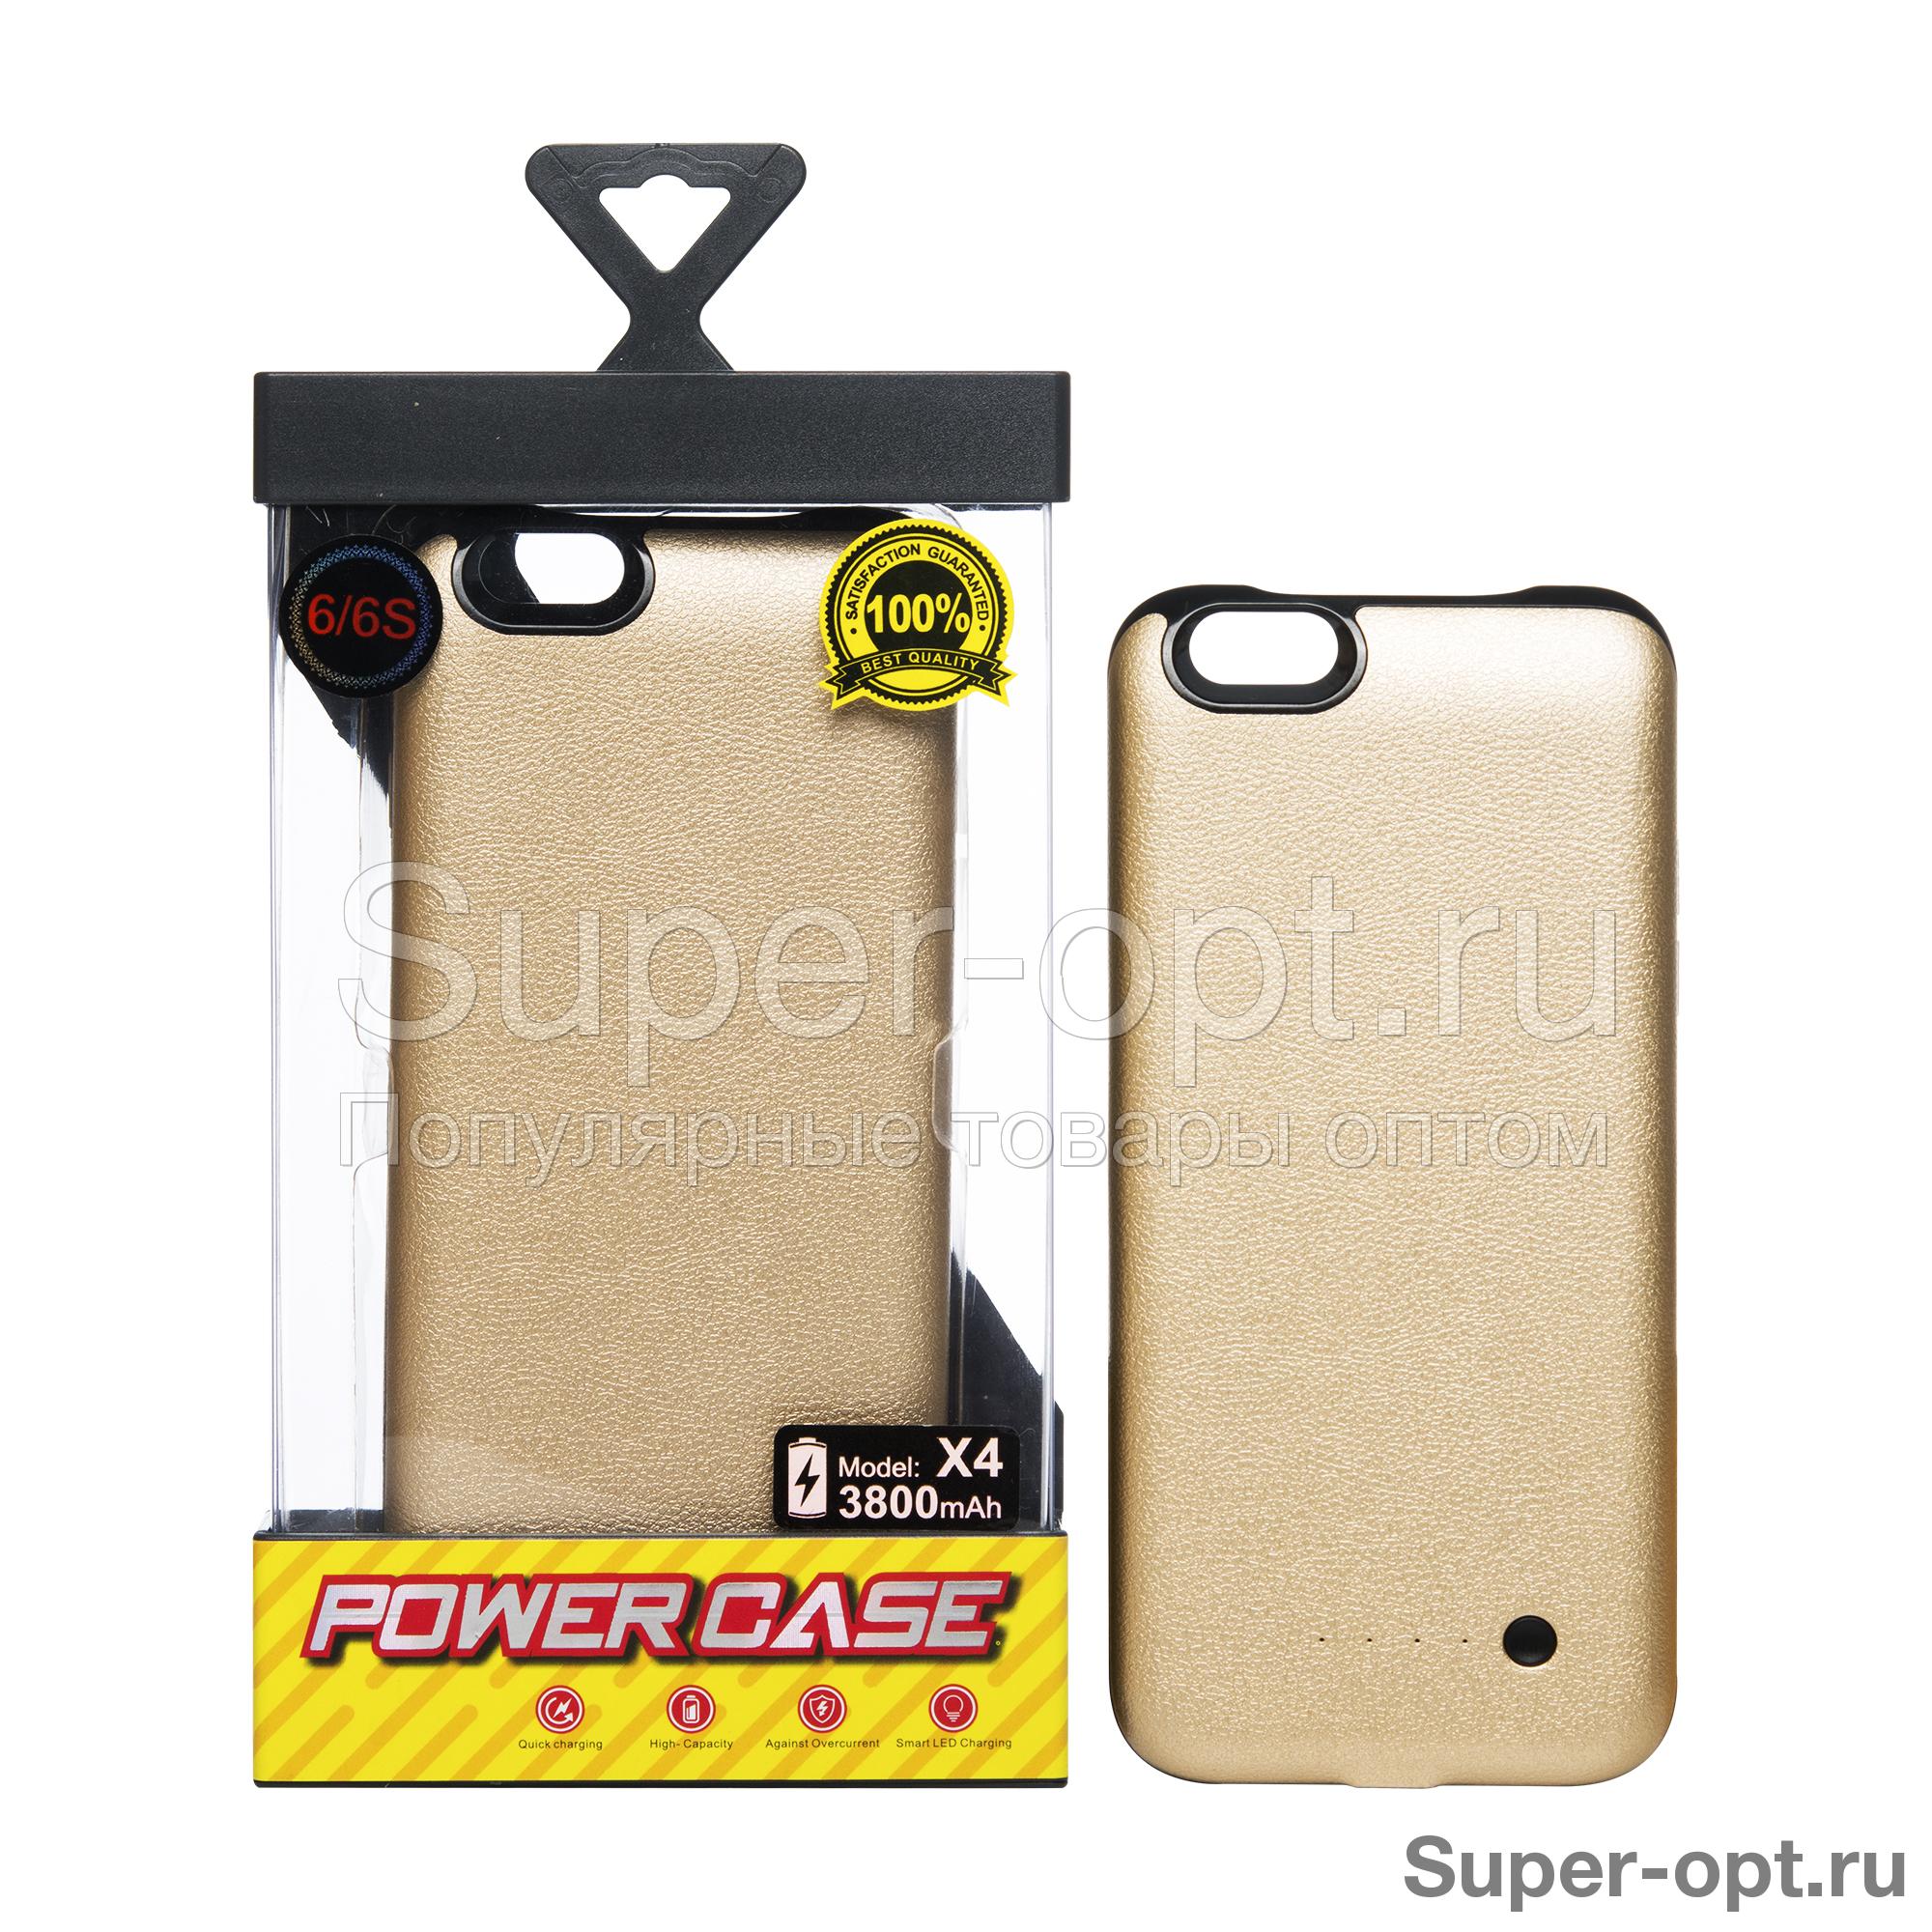 Чехол-аккумулятор Power Case X4 3800 mAh для iPhone 6/6s